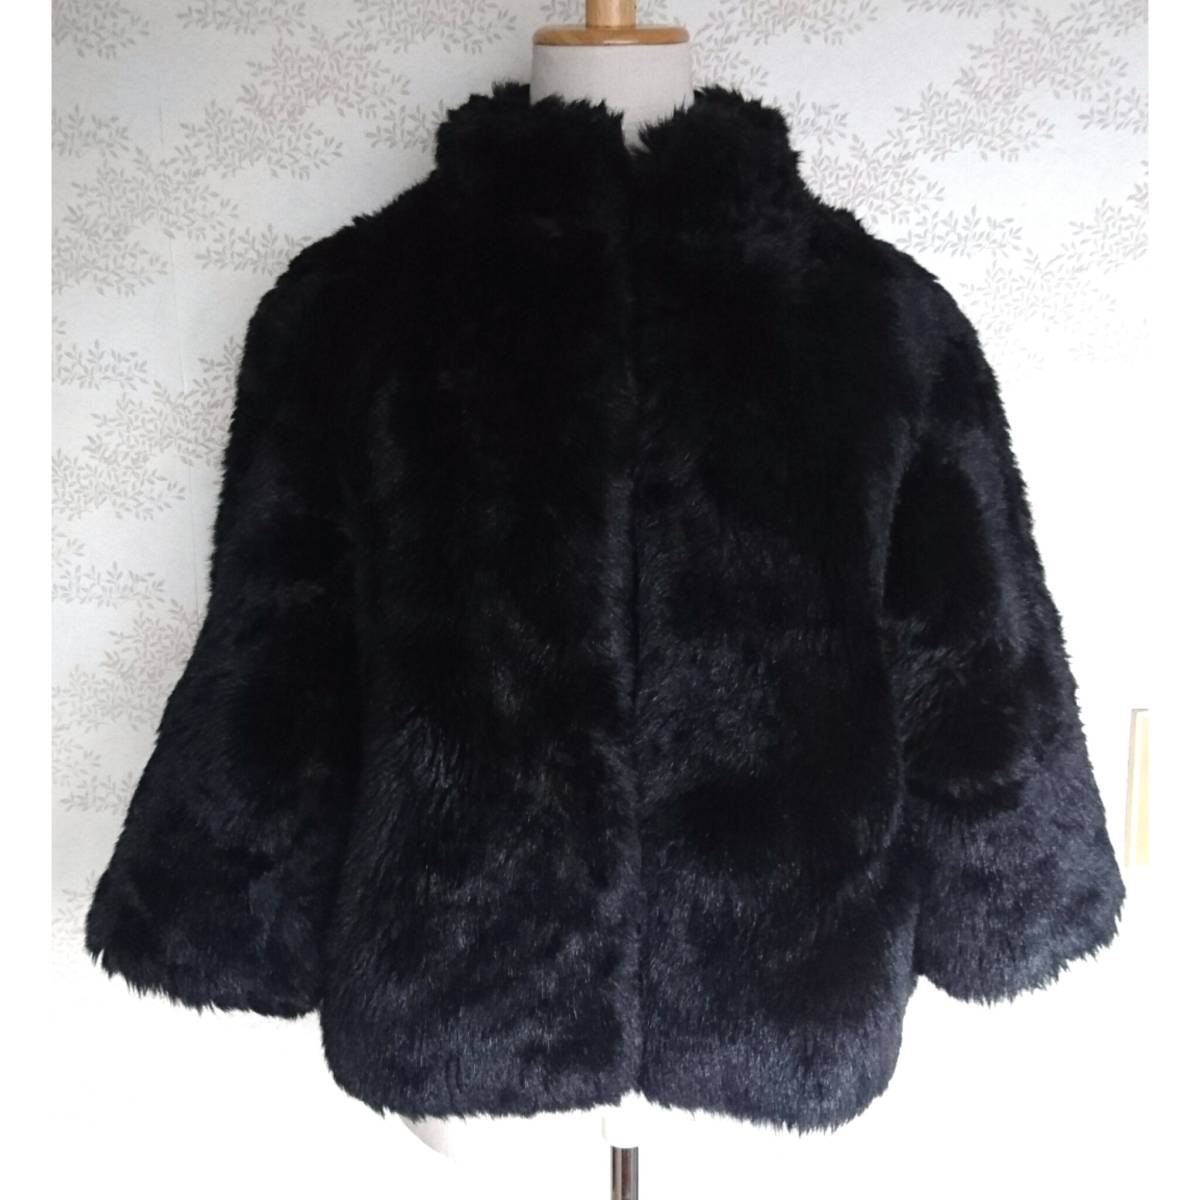  boa coat fur coat mo Como ko outer coat fur Fur vintage Vintage Vintage old clothes boa coat fur black black 7 minute height 